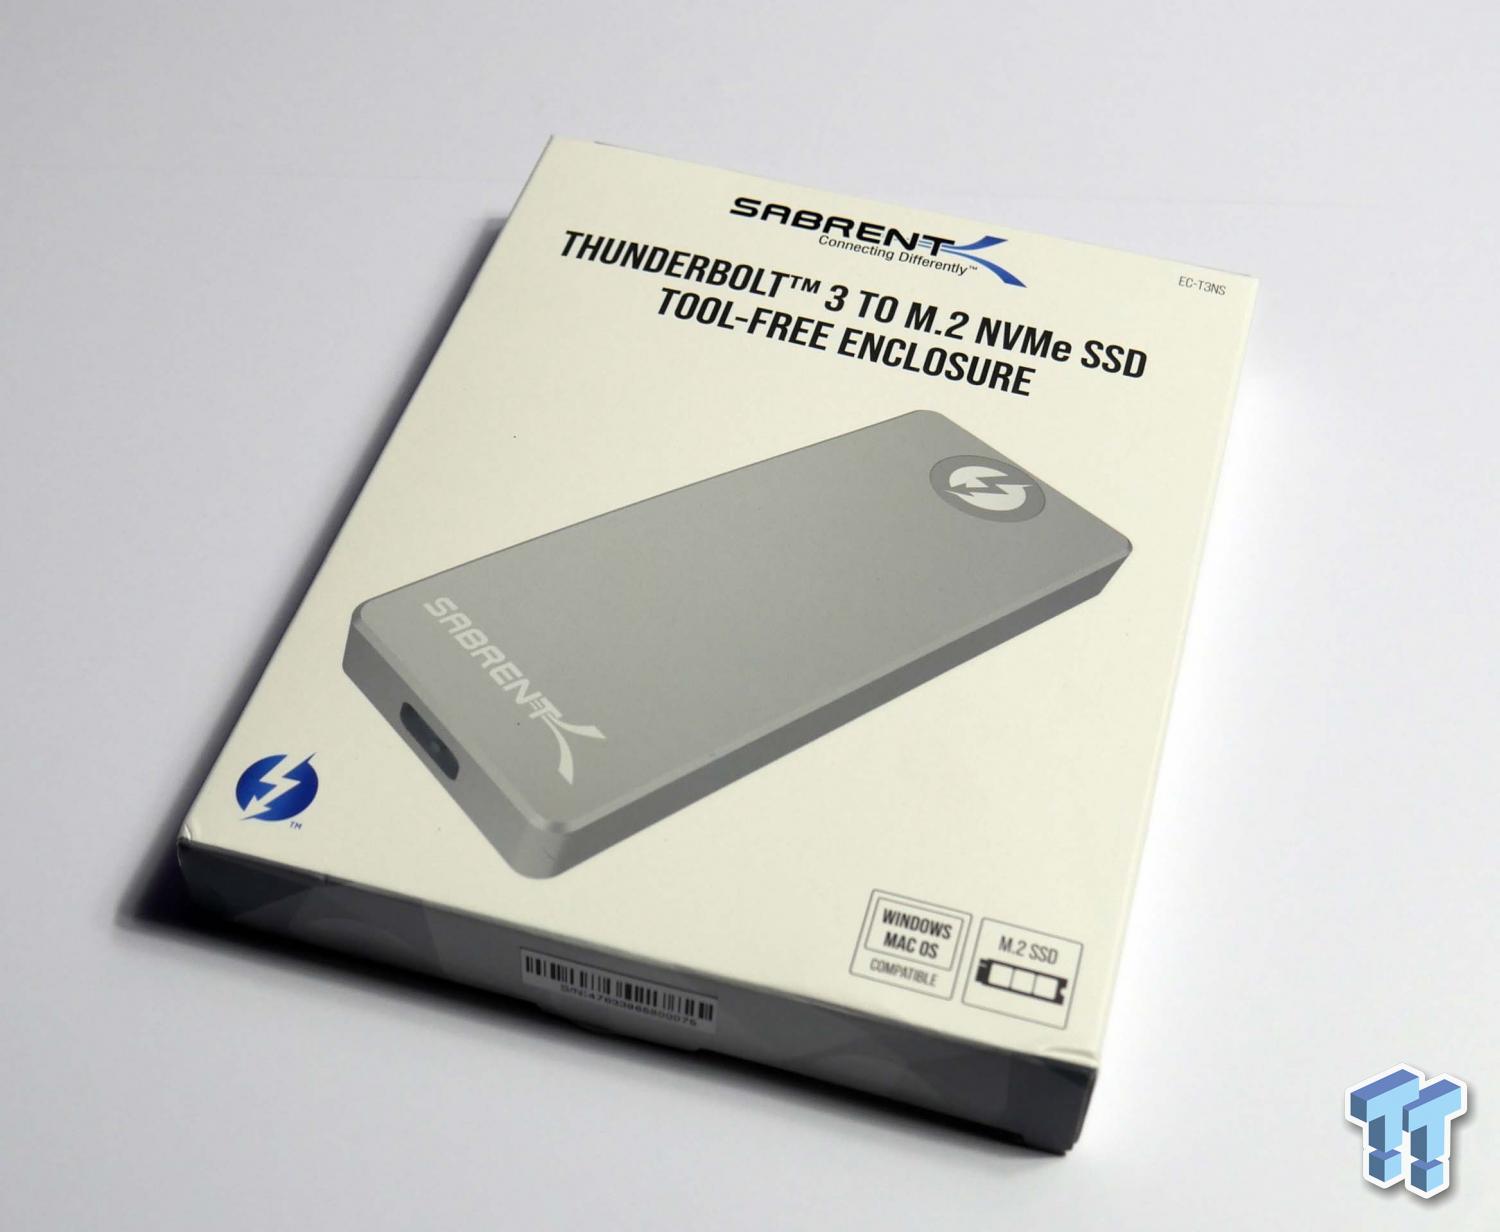 Sabrent Thunderbolt 3 to M.2 NVMe SSD Tool-Free Enclosure